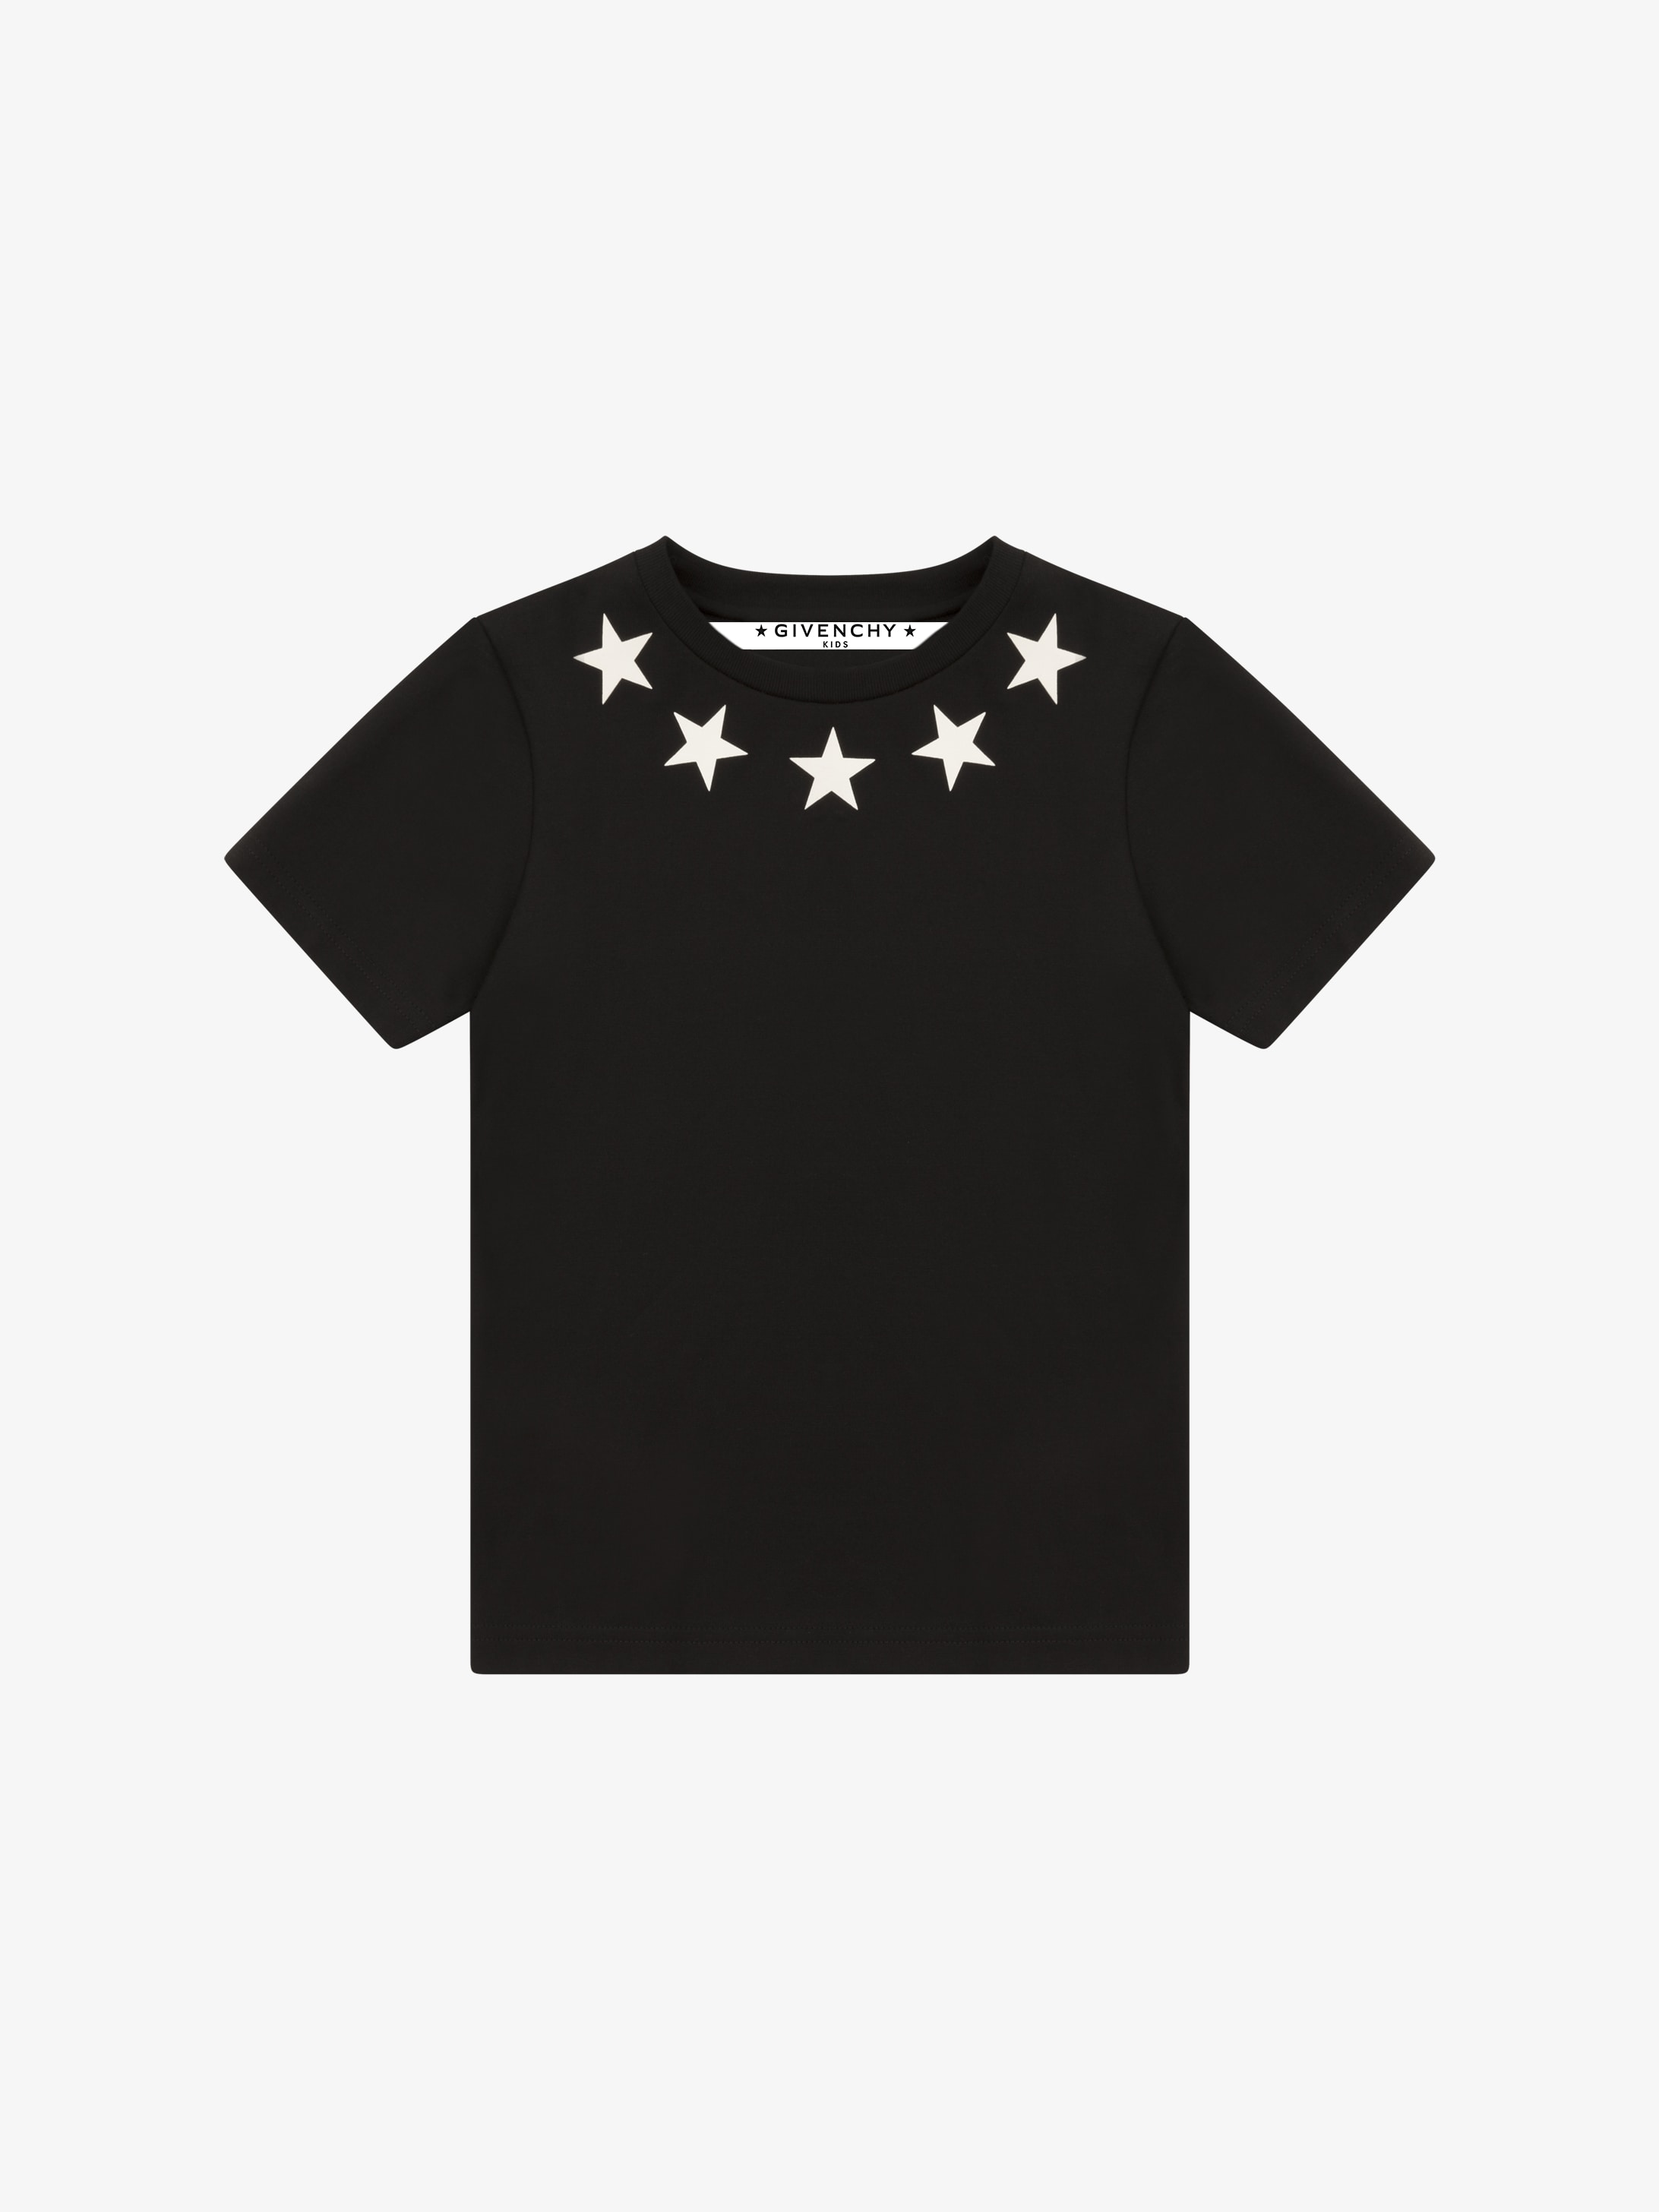 givenchy t shirt black stars